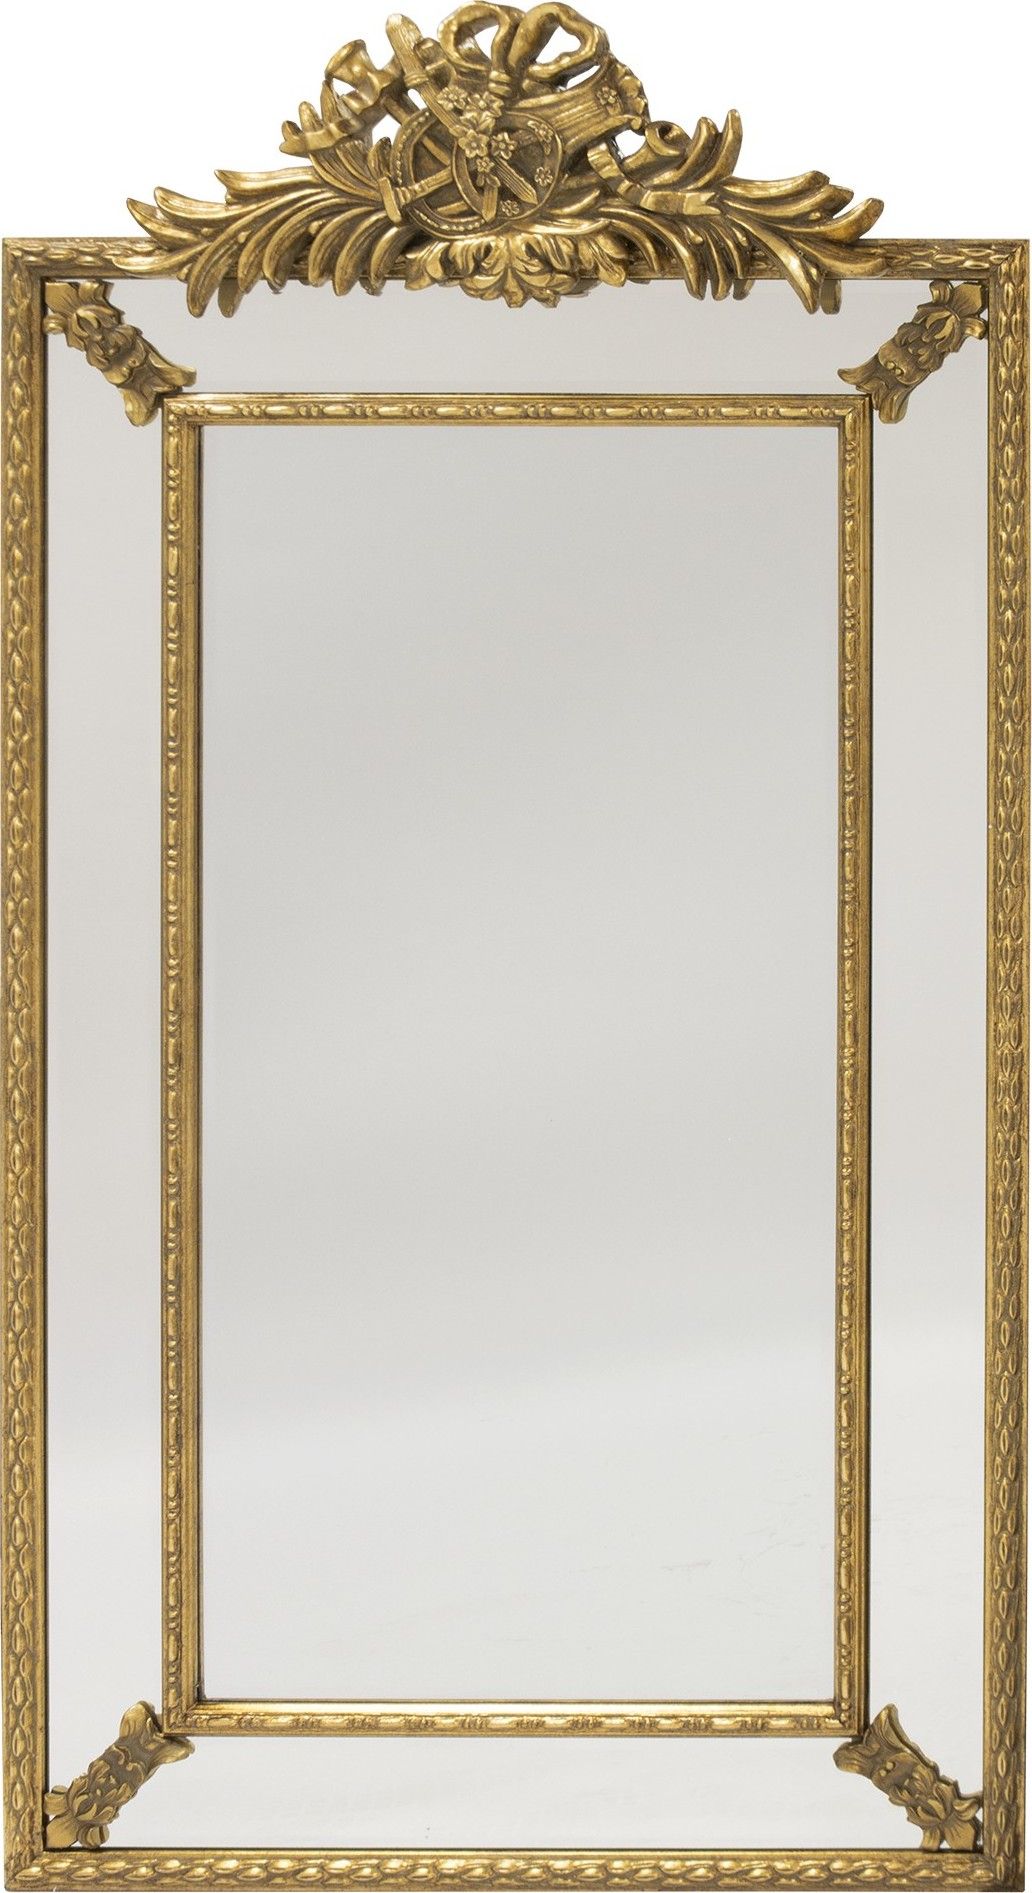 Velké zrcadlo s ornamentem 122330 Mdum - M DUM.cz